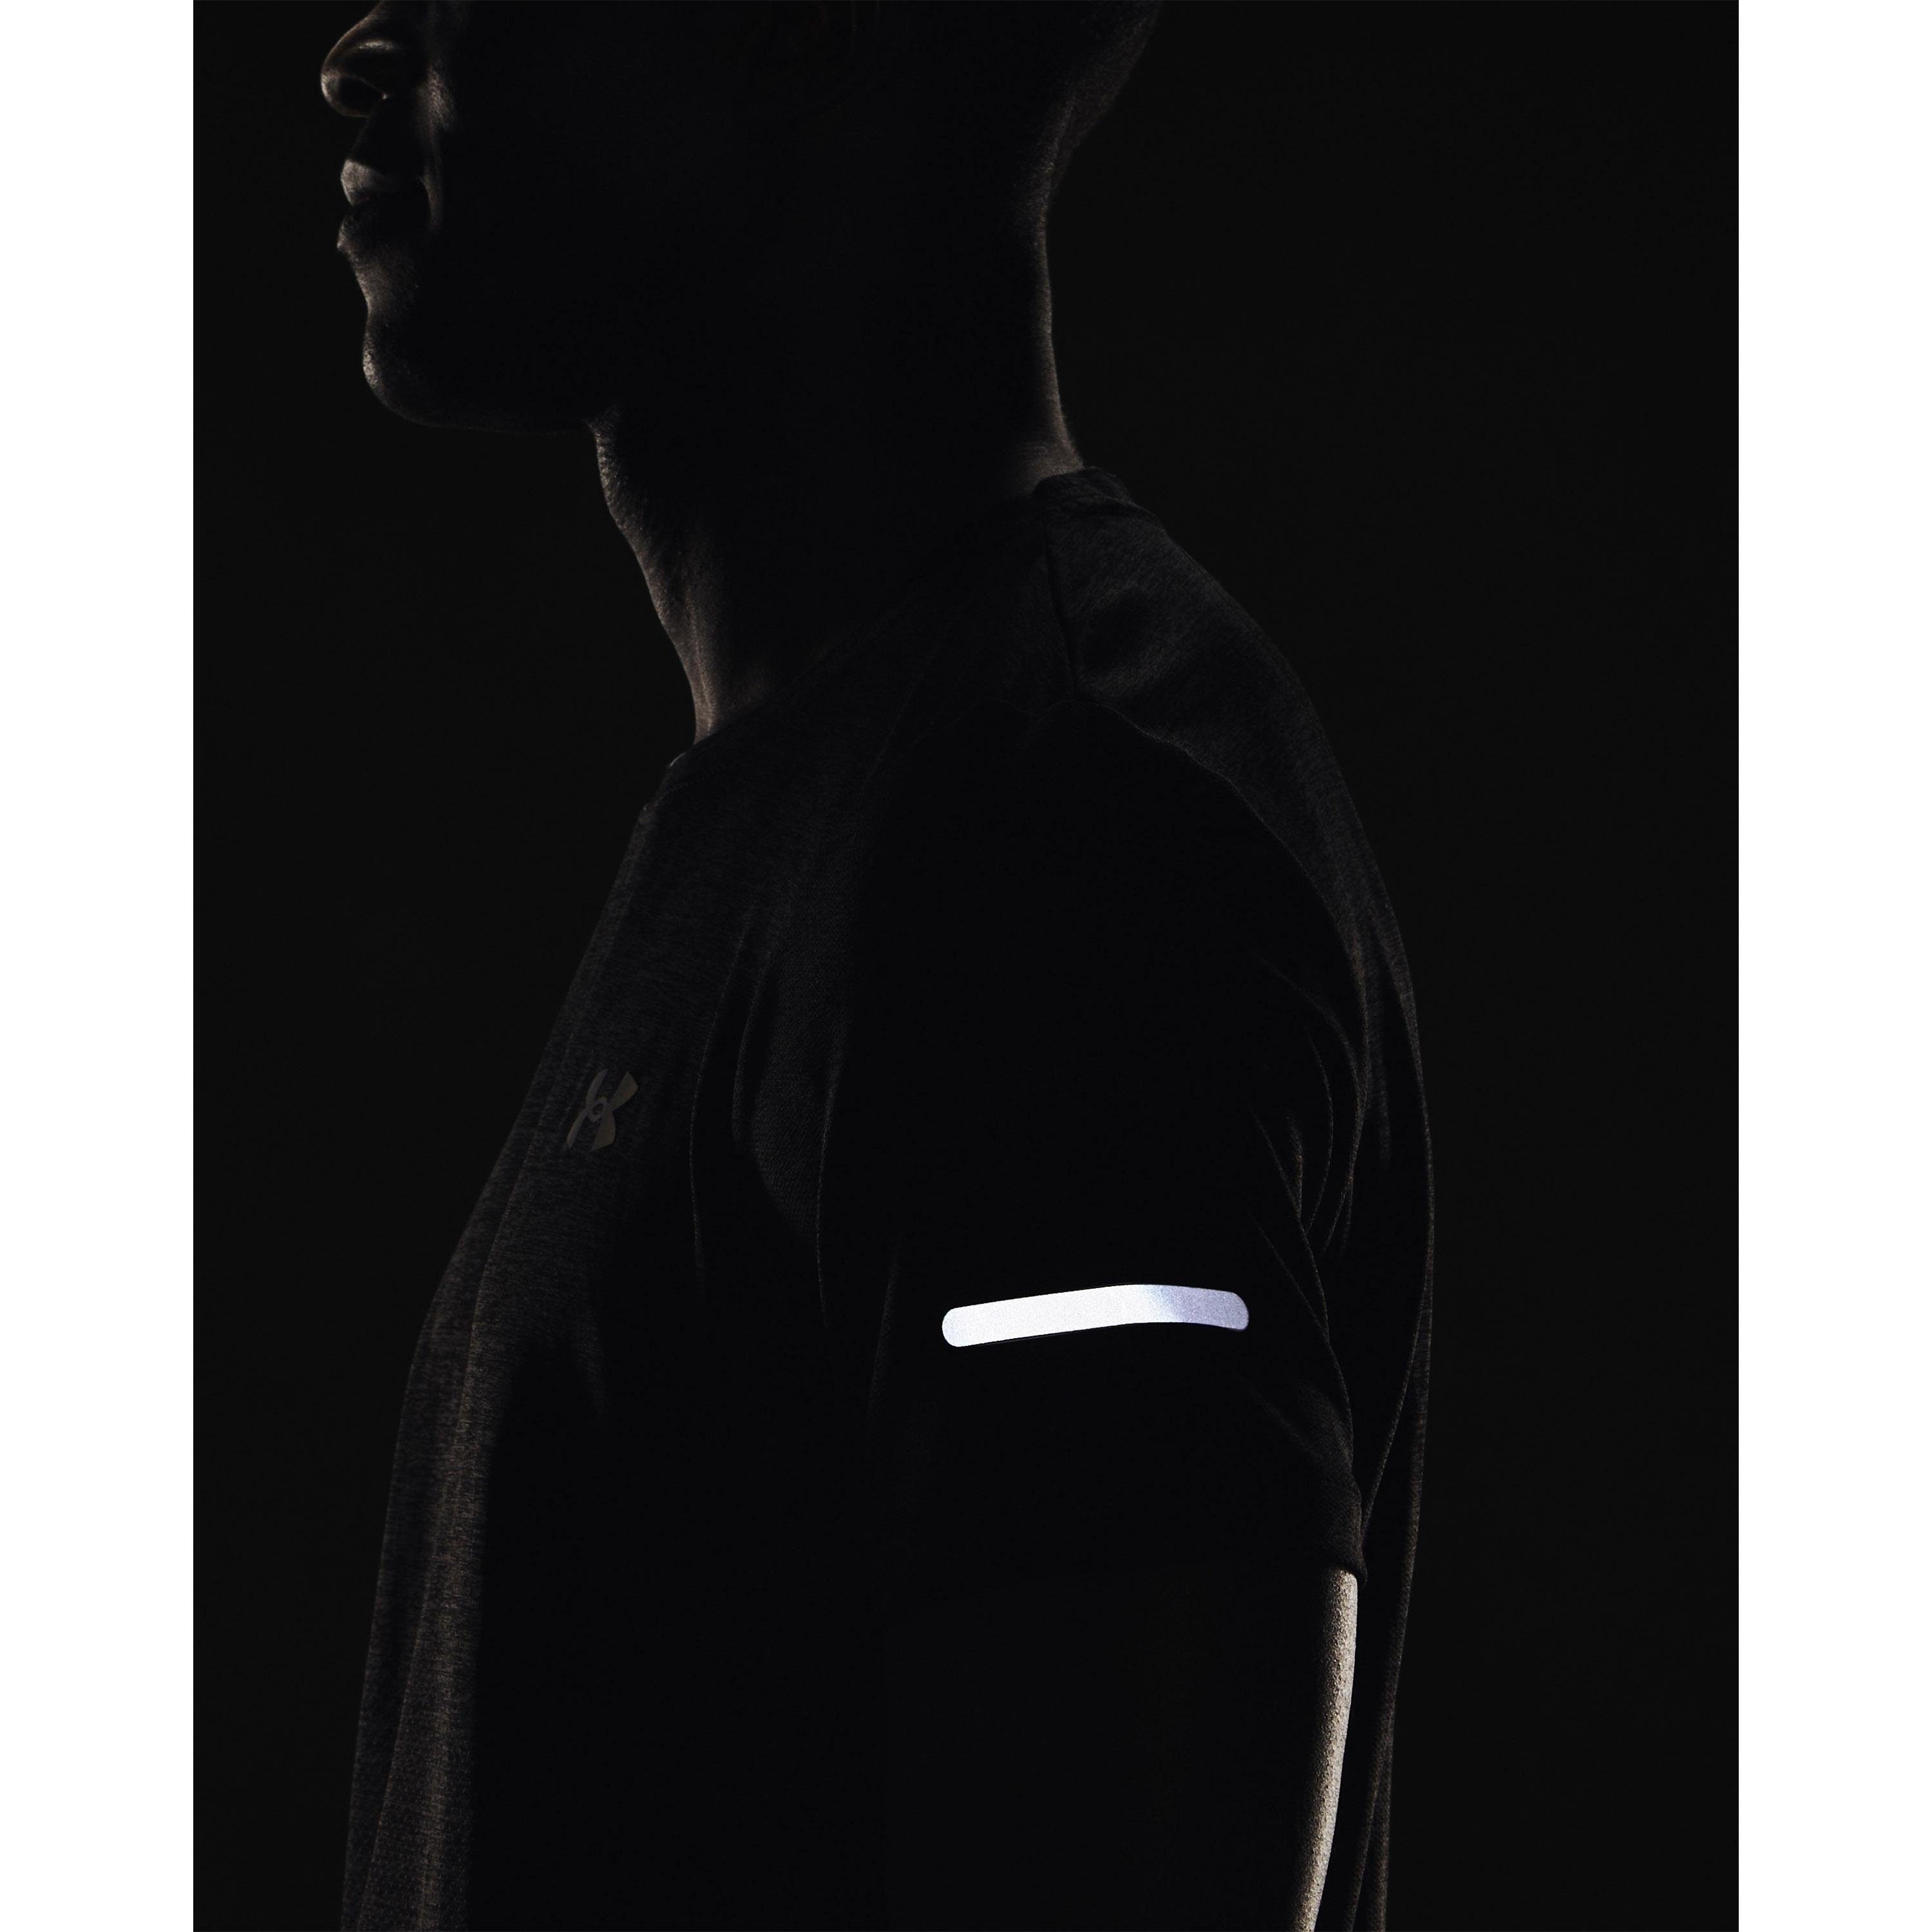 SEAMLESS Funktionsshirt Armour® black-reflective Under